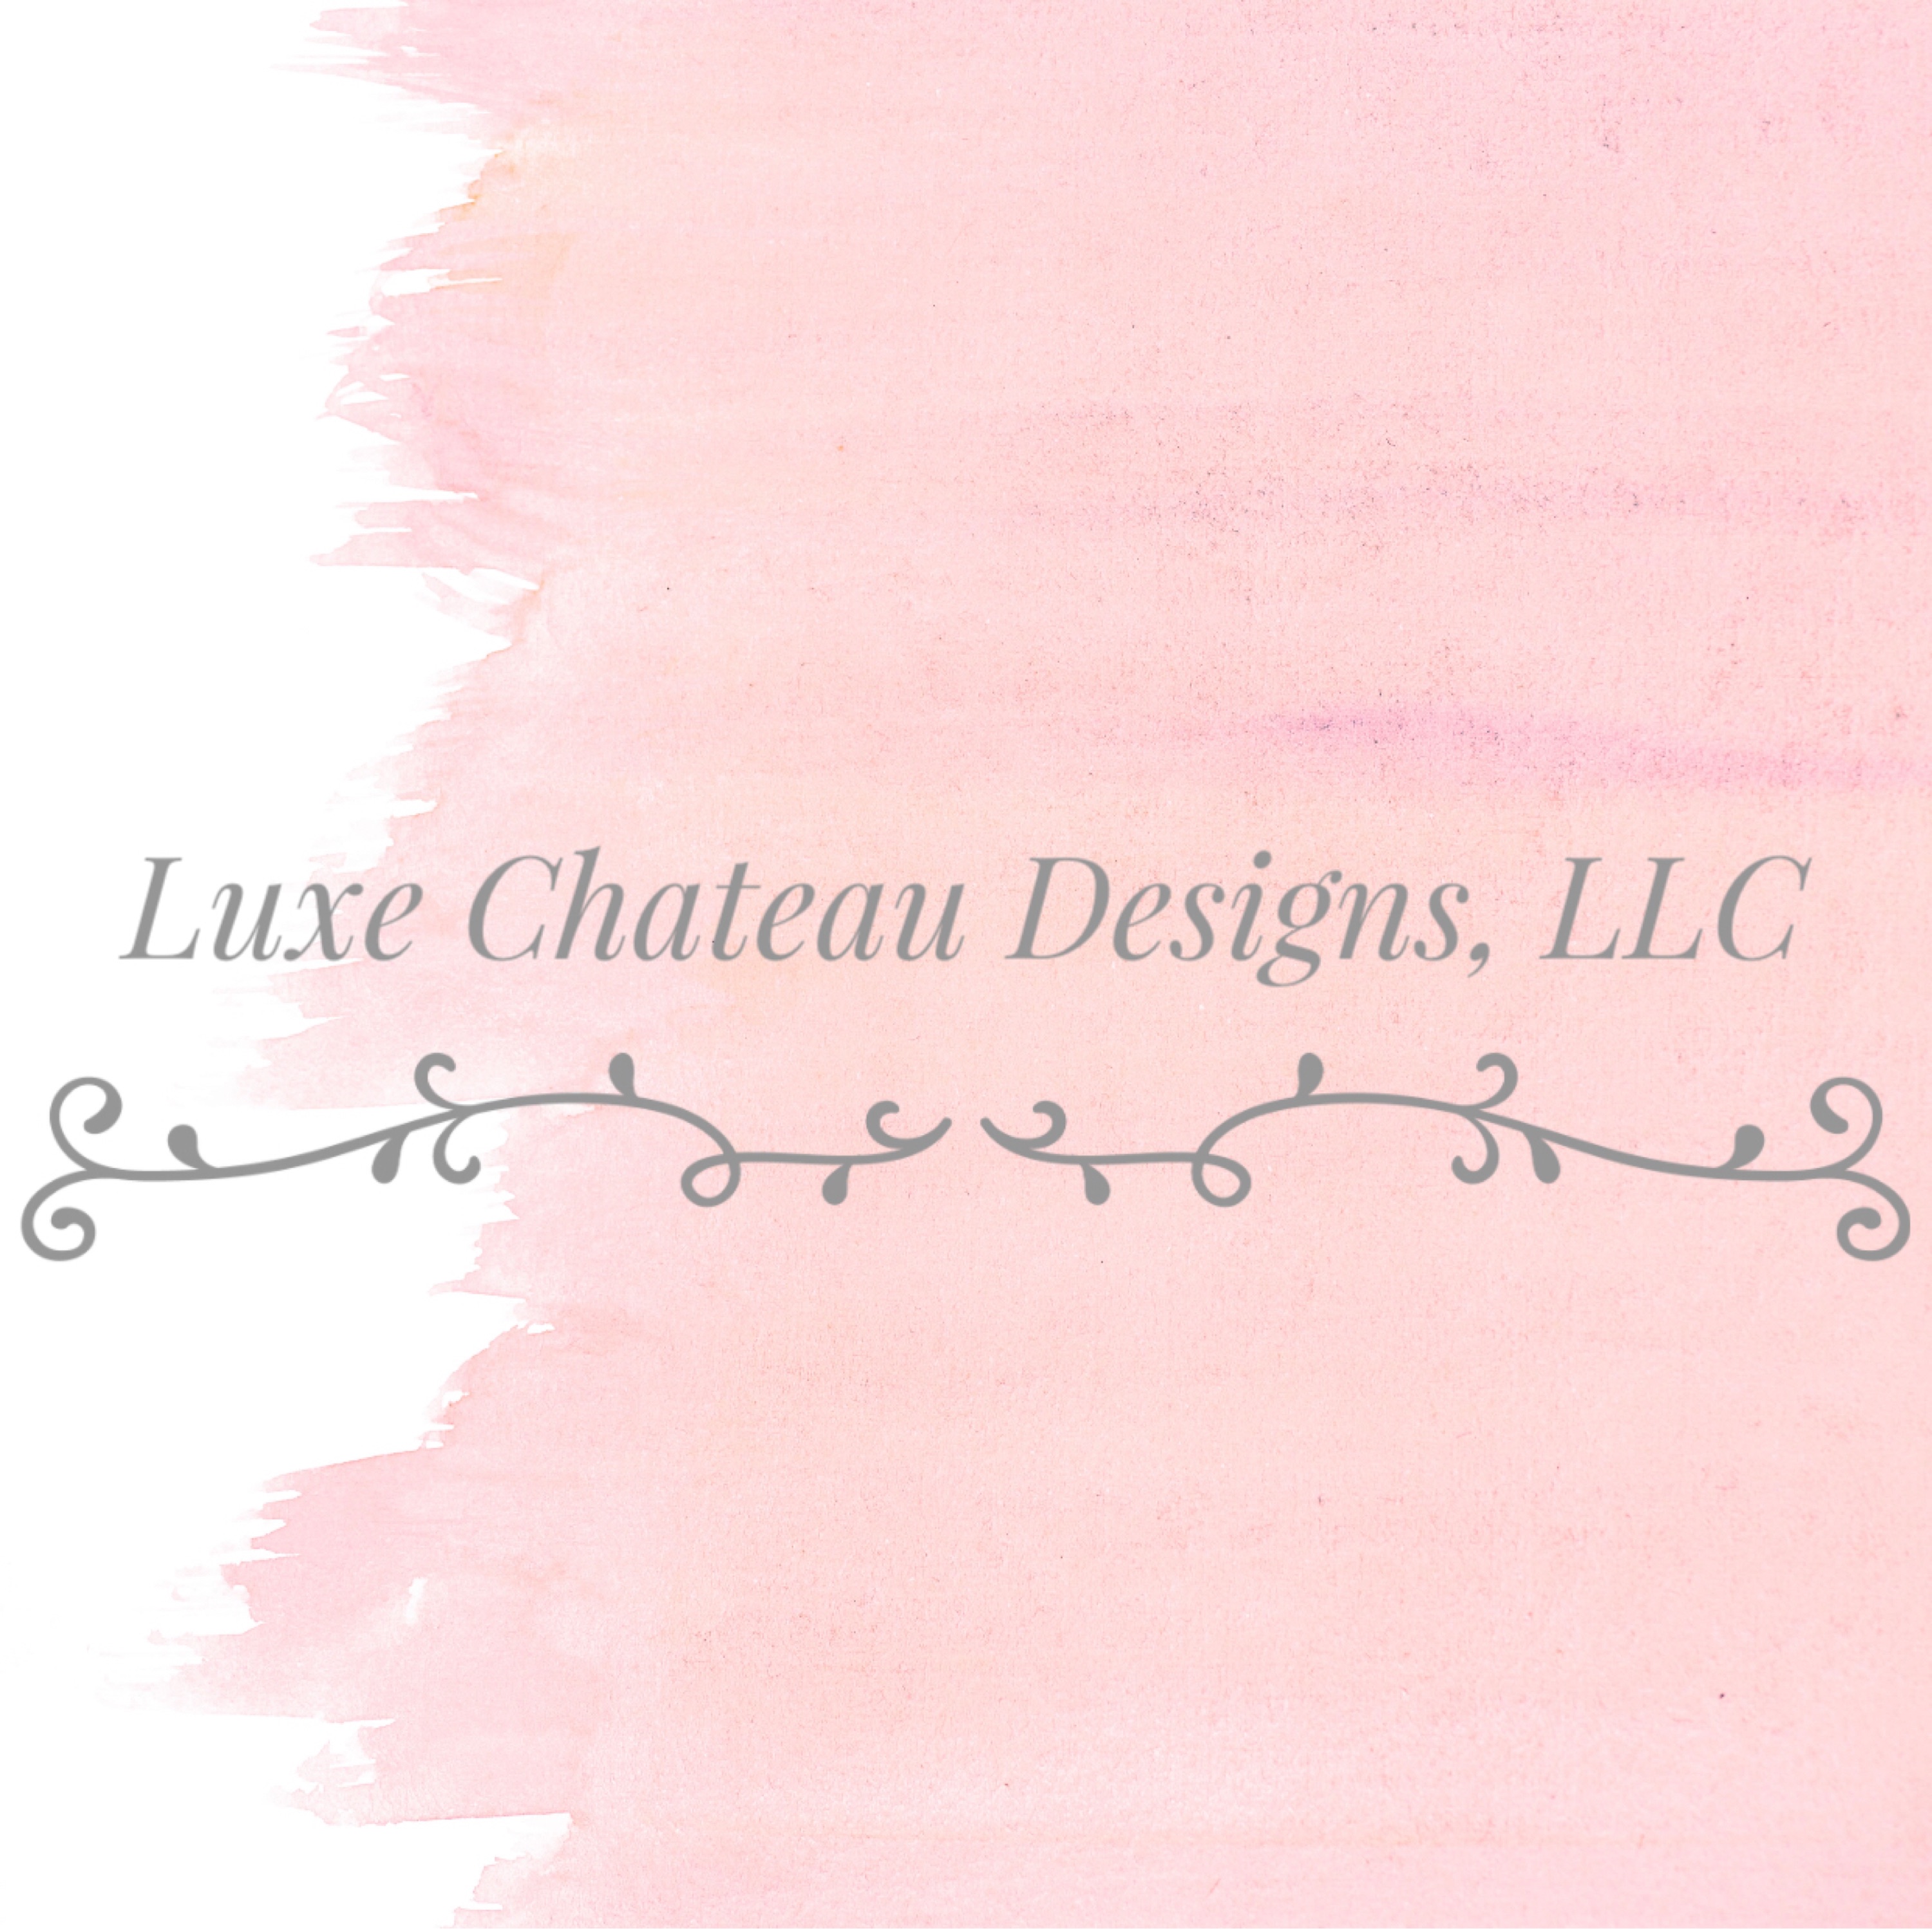 Luxe Chateau Designs, LLC Logo